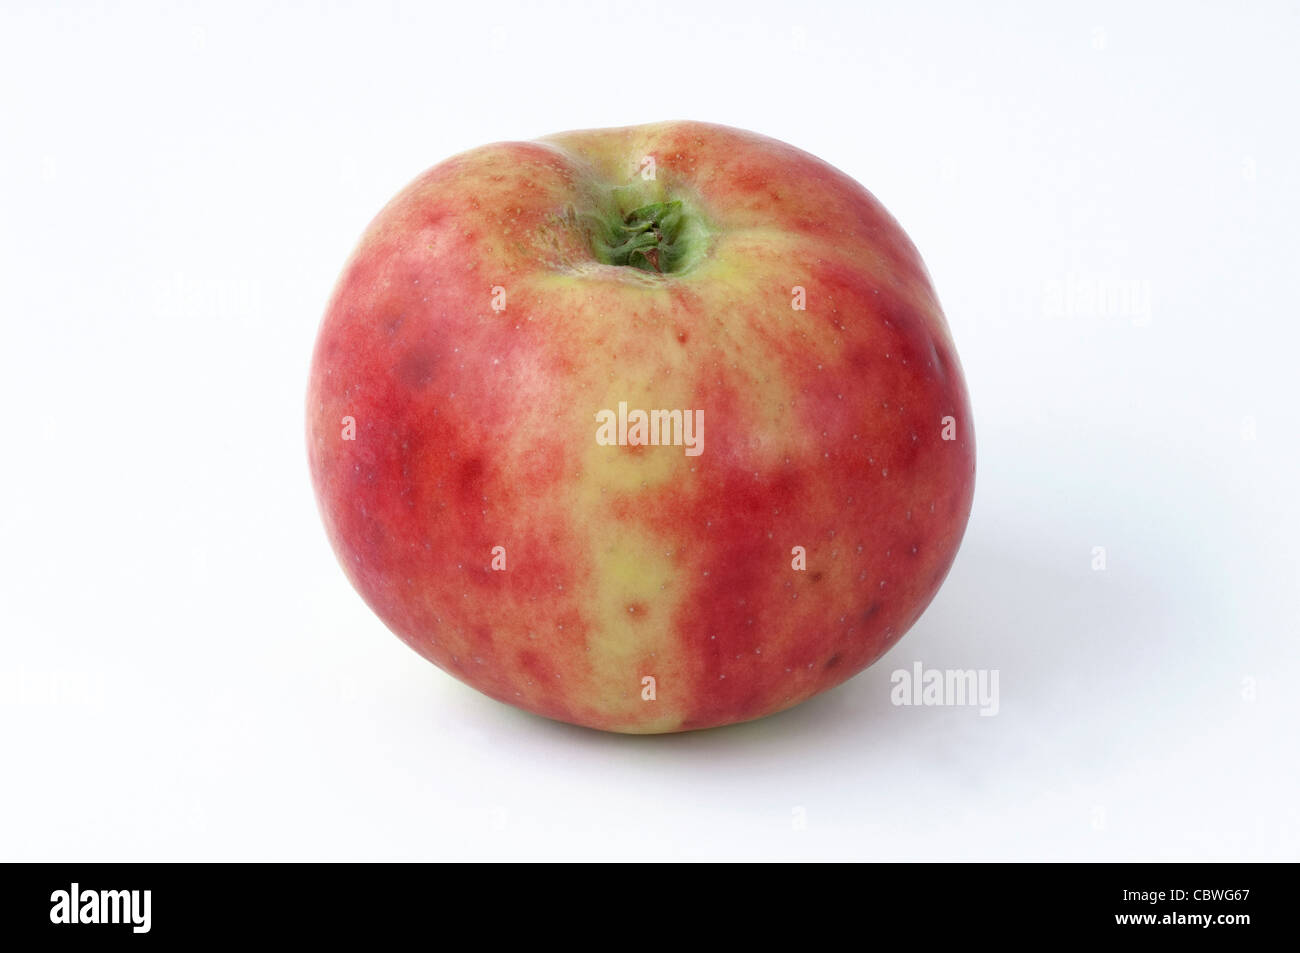 Domestic Apple (Malus domestica), variety: Gravenstein, ripe fruit. Studio picture against a white background. Stock Photo